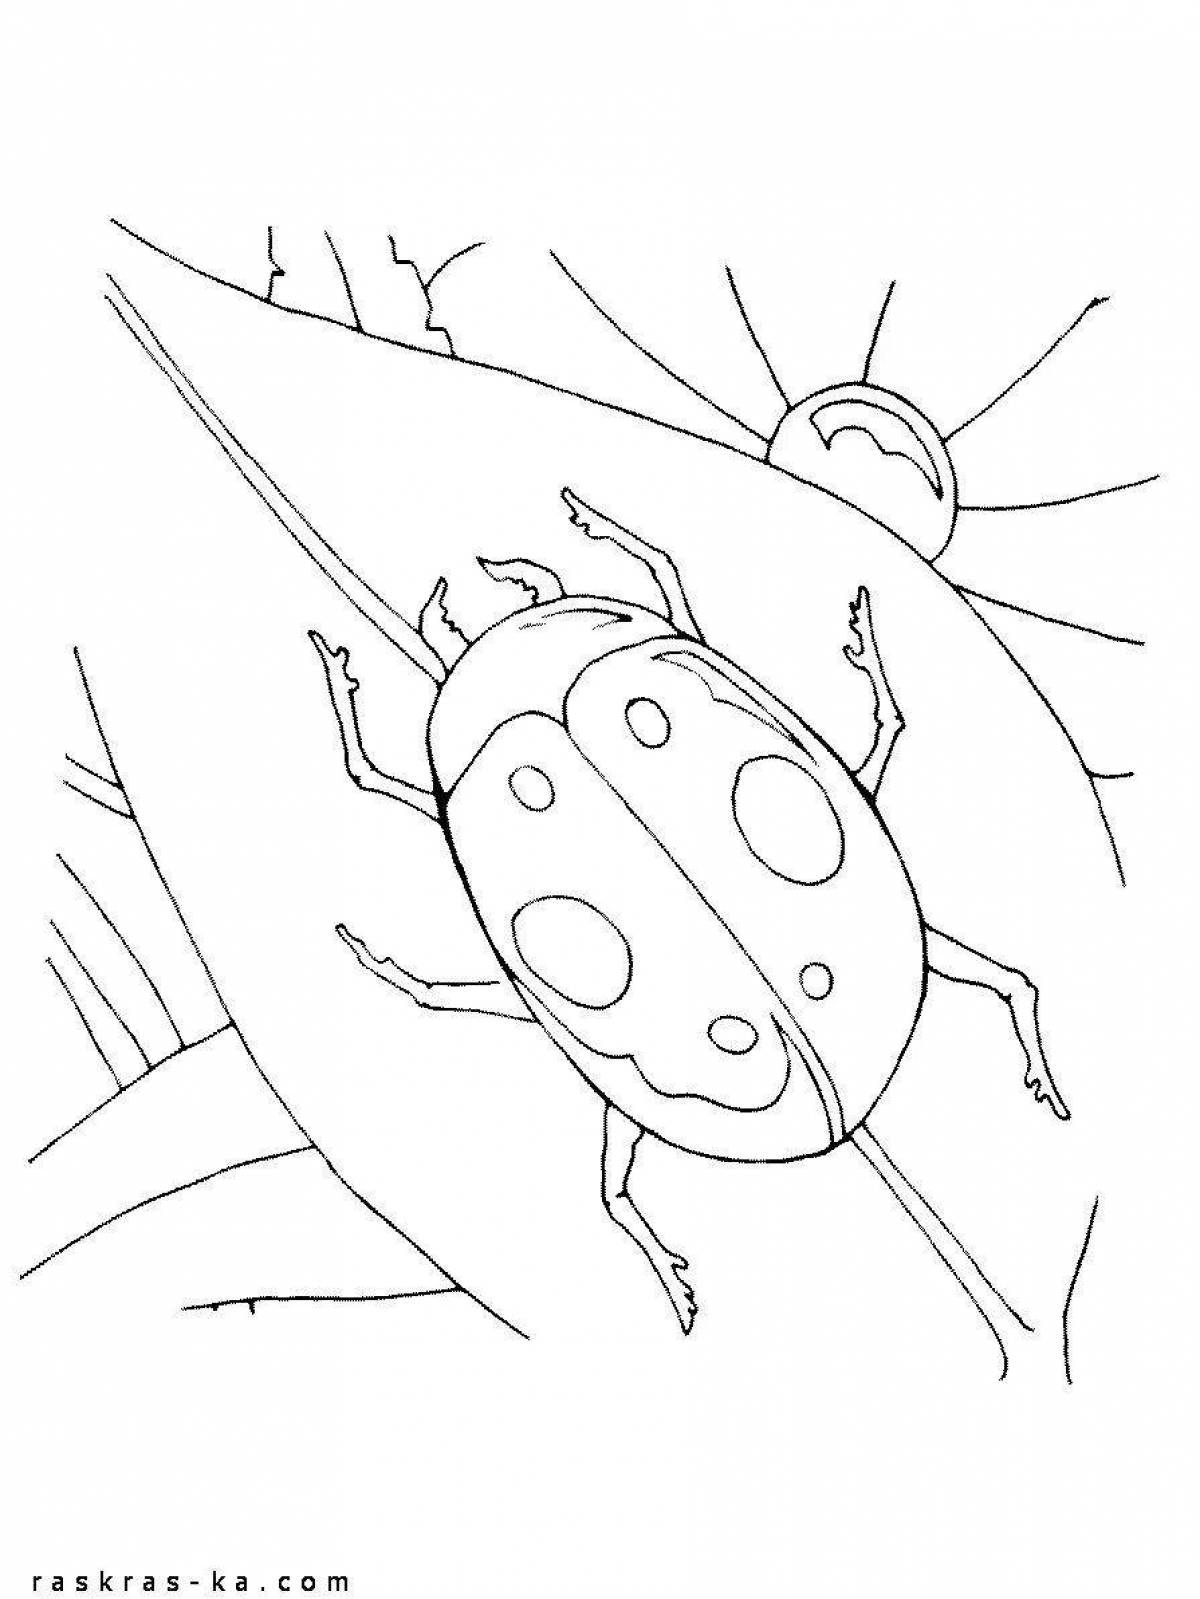 Live beetle on a dandelion